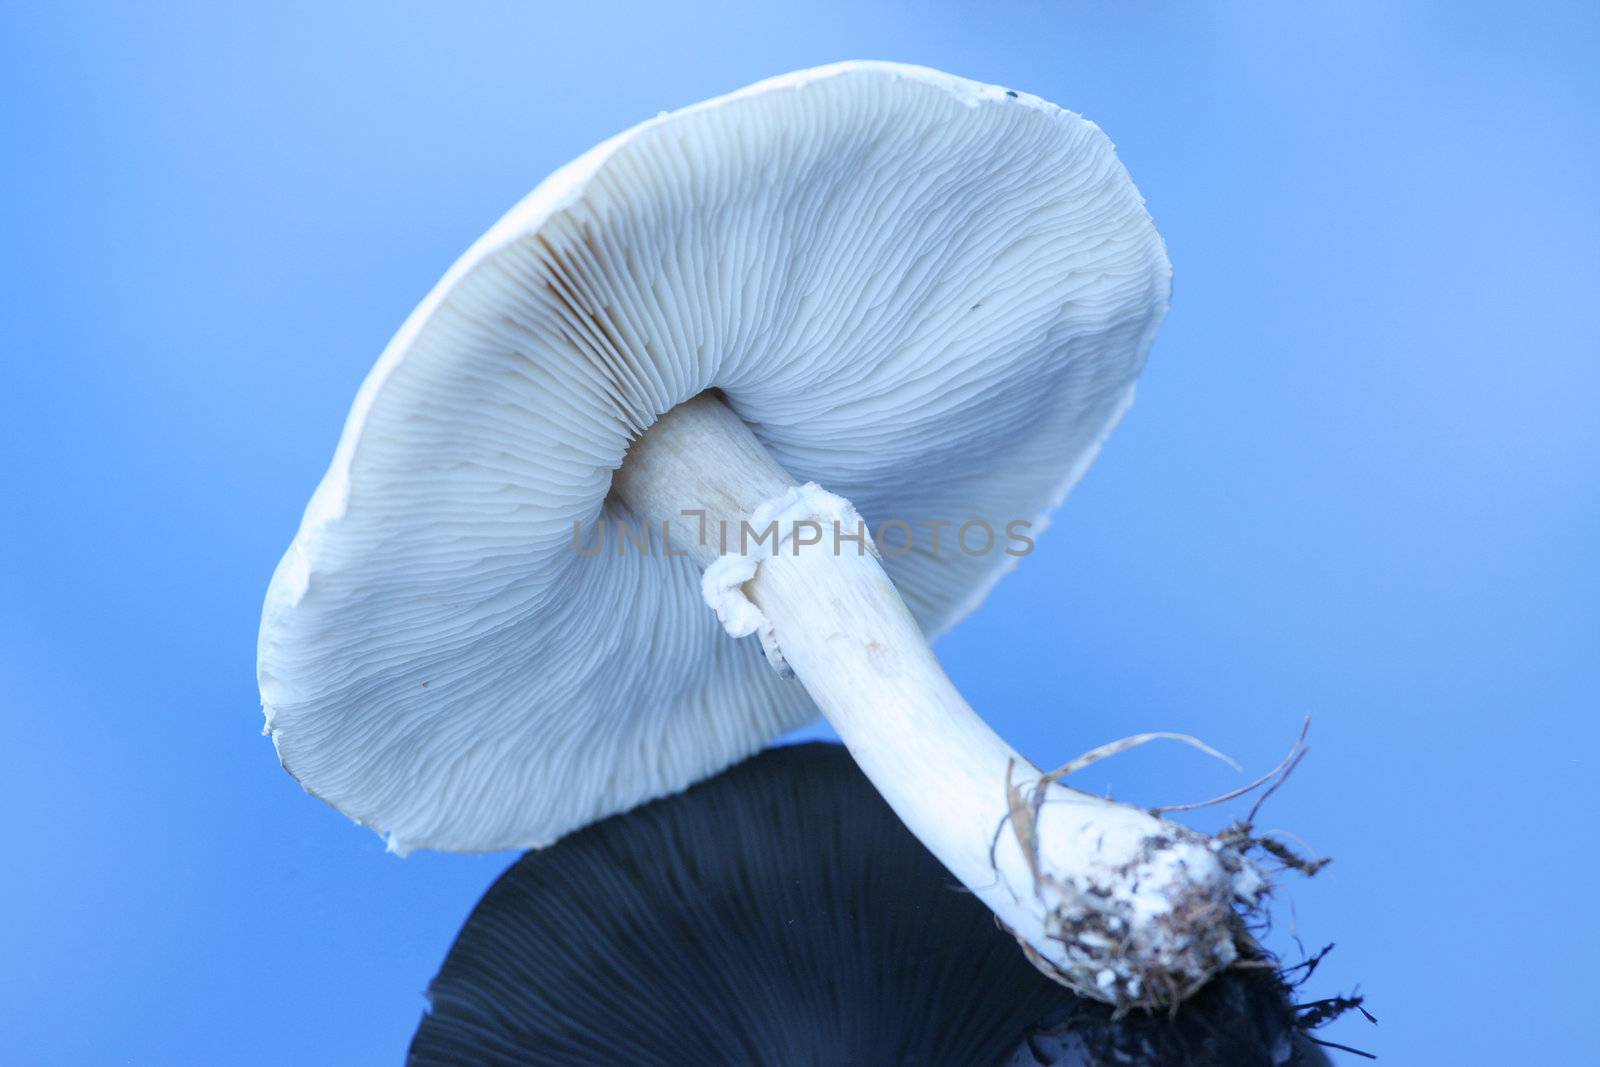 Large white mushroom on reflective surface.; by jarenwicklund